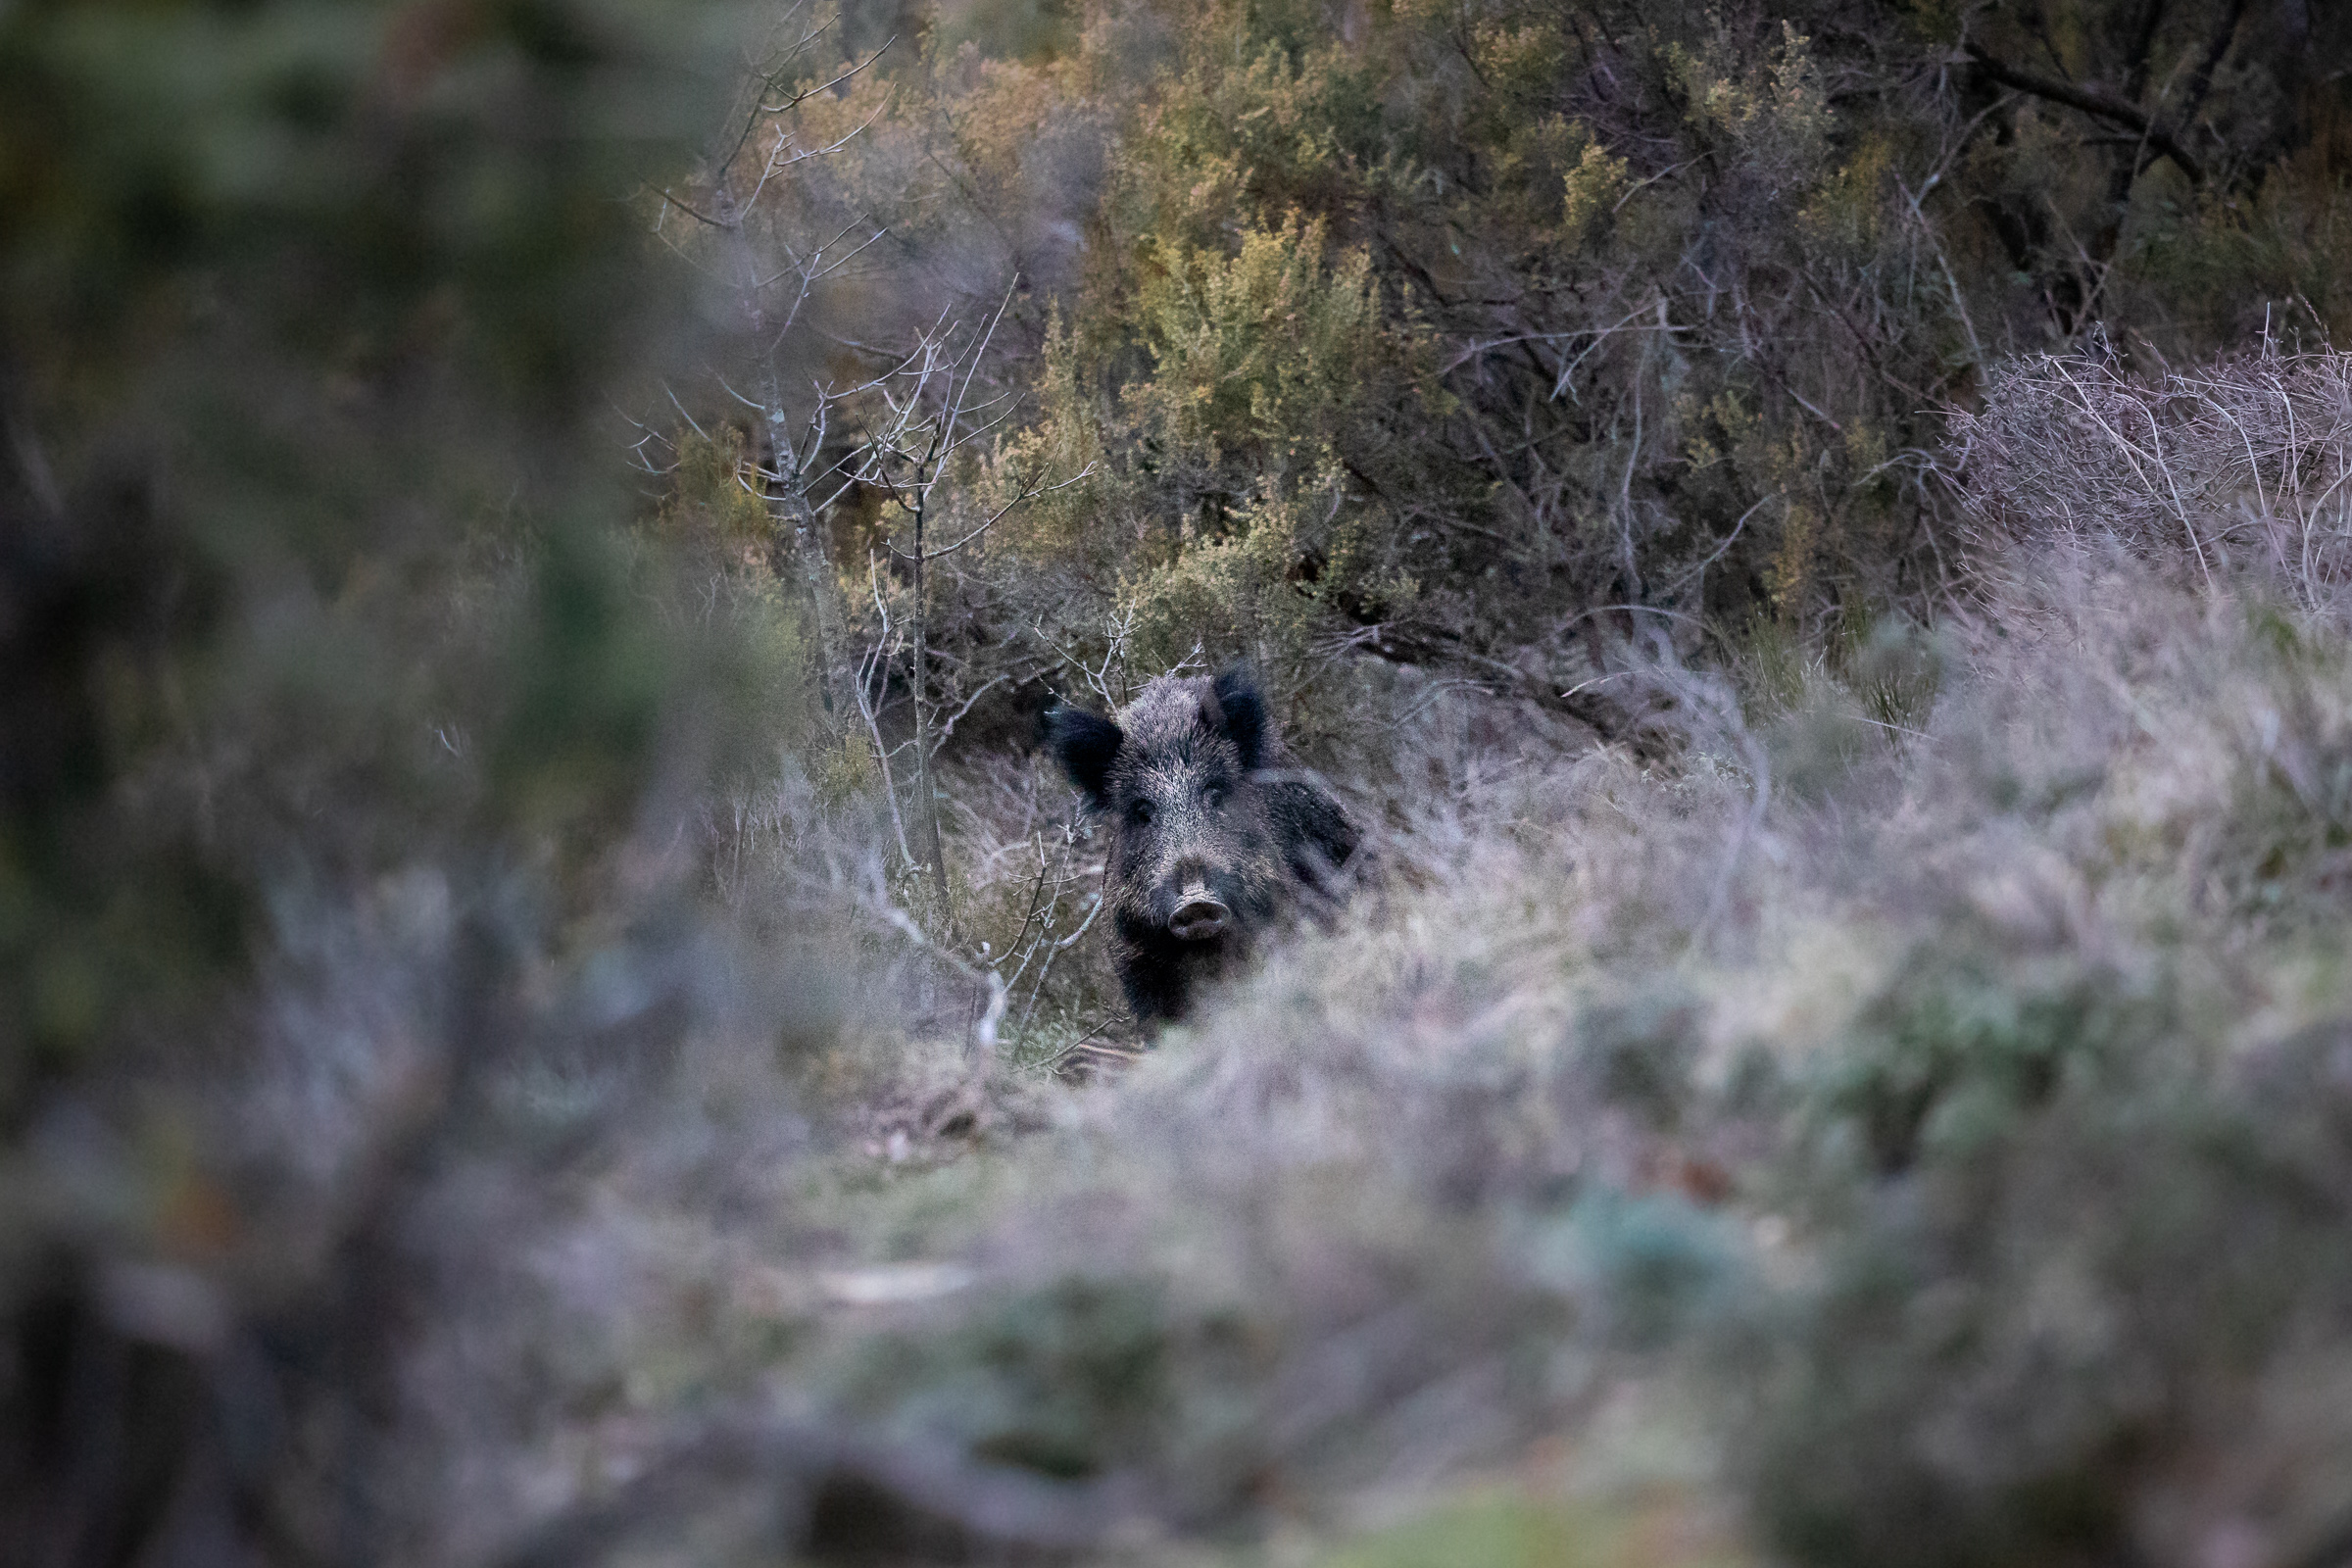 Curious boar...